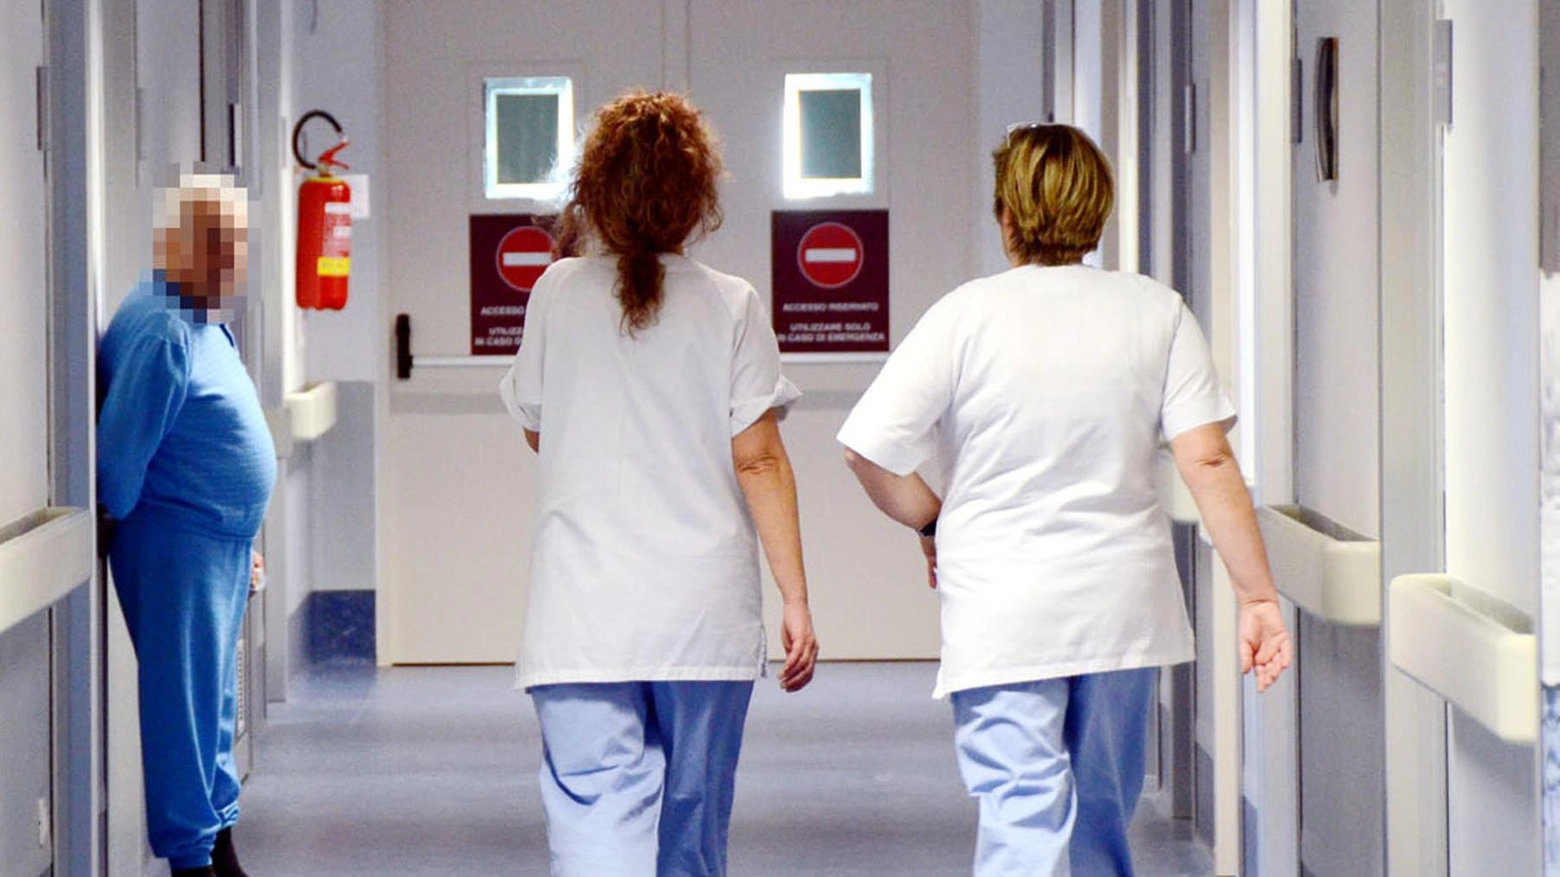 

"Emergenza infermieri a Siena: Alle Scotte assistenza regolare"